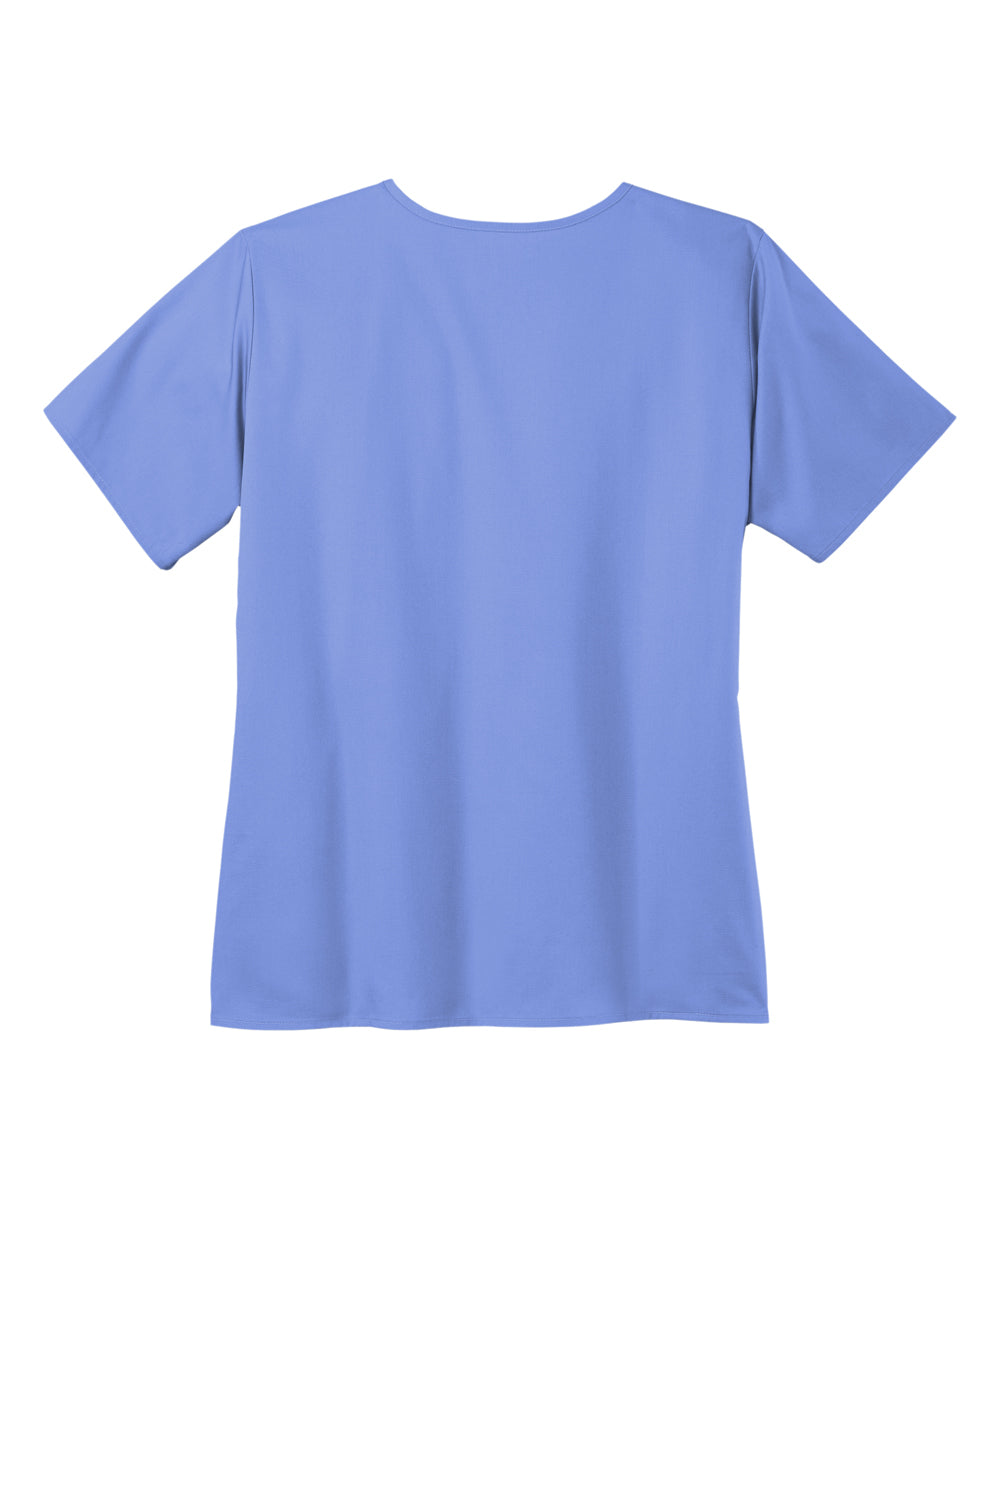 Wonderwink WW4760 WorkFlex Short Sleeve V-Neck Mock Wrap Shirt Ceil Blue Flat Back